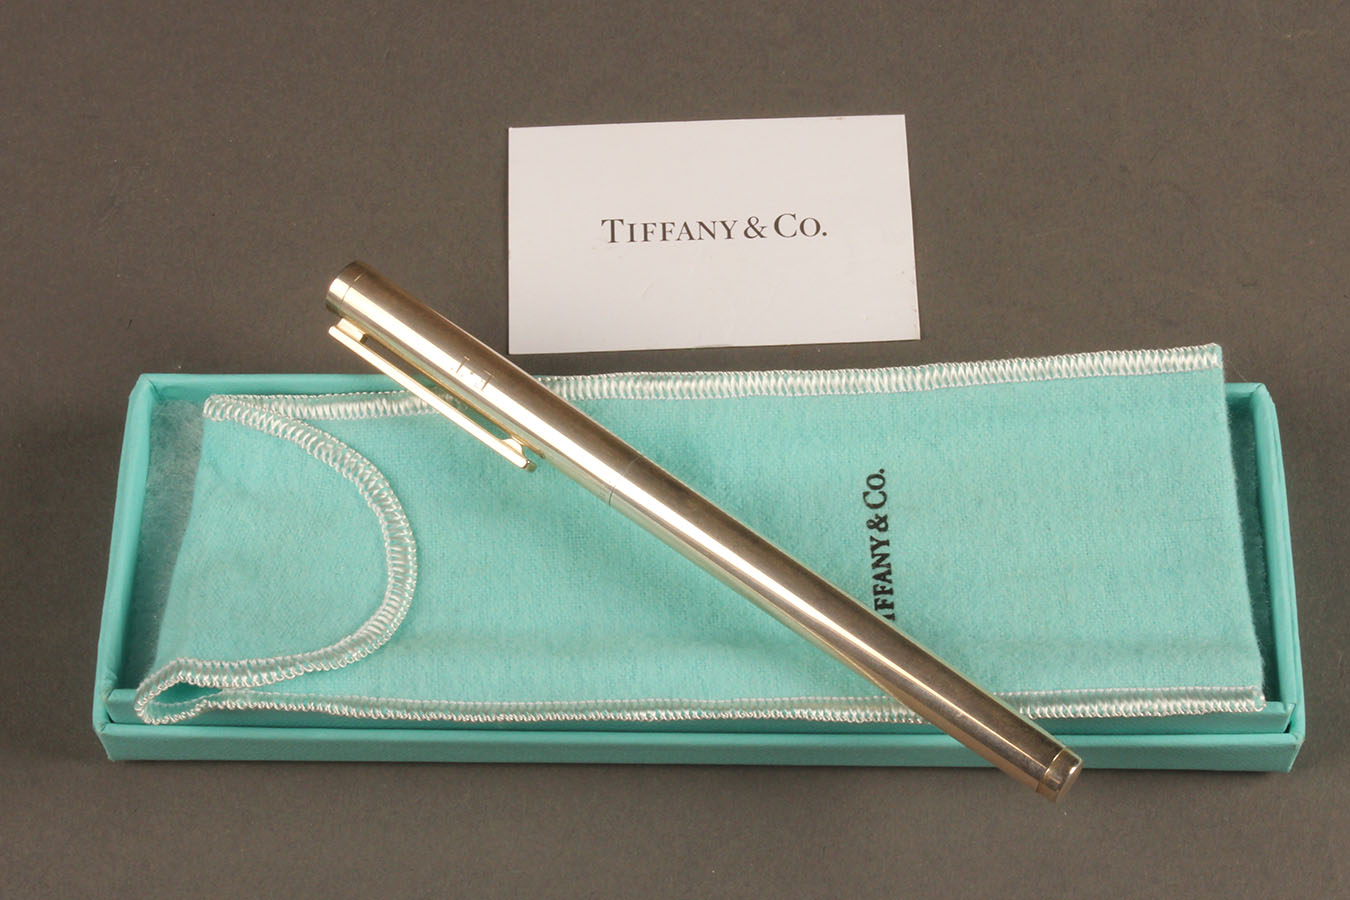 tiffany & co silver pen